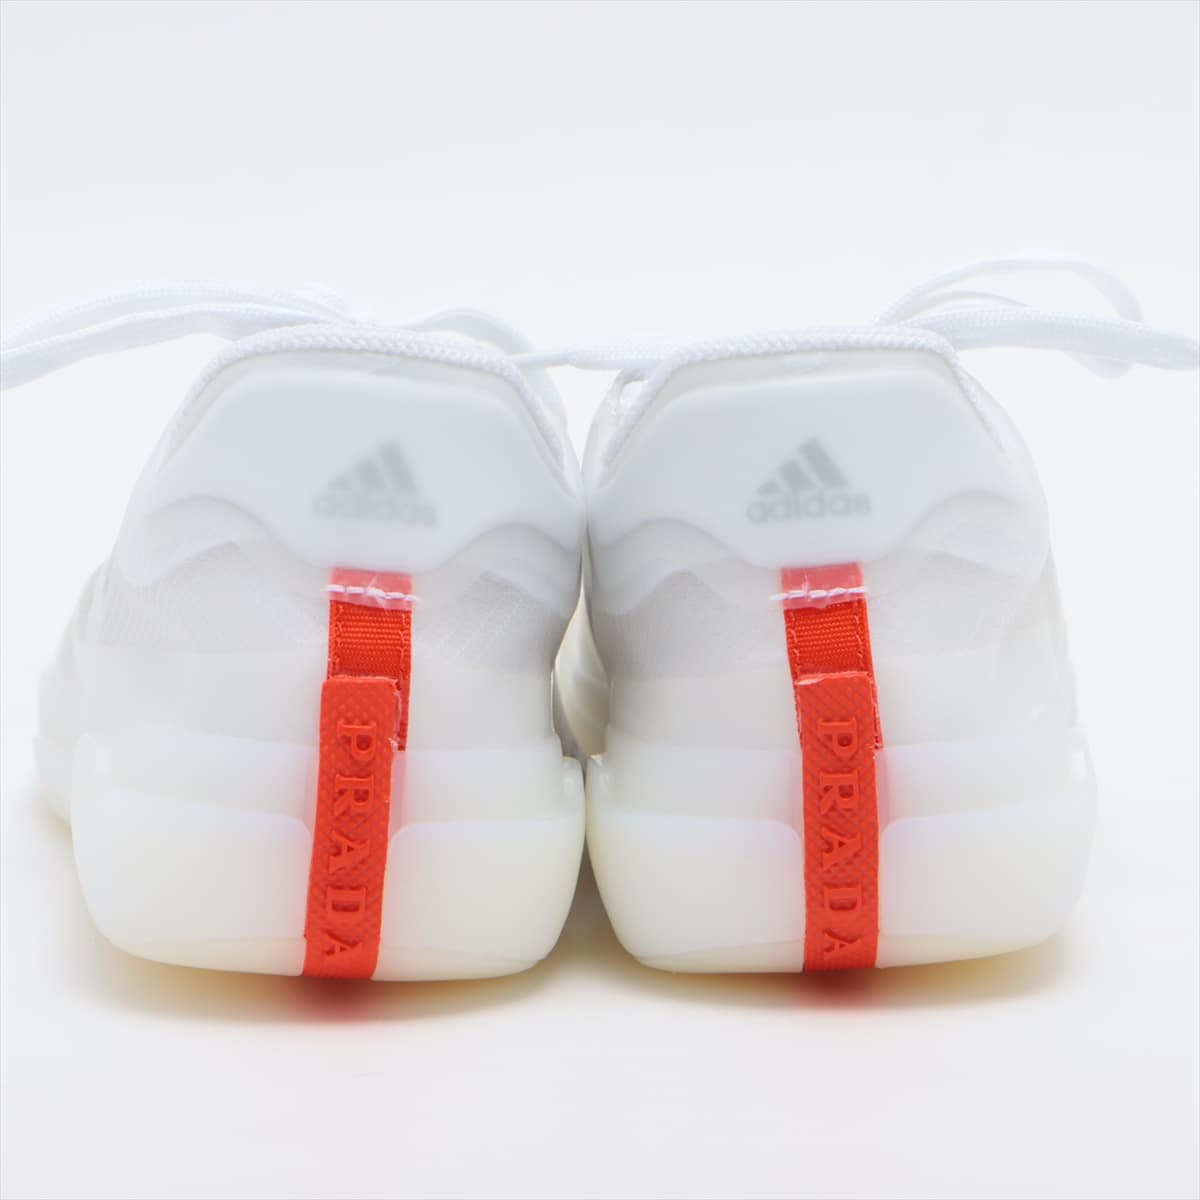 Prada Sport x adidas Fabric Sneakers 25.0cm Unisex White A+P Luna Rossa 21 FZ5447